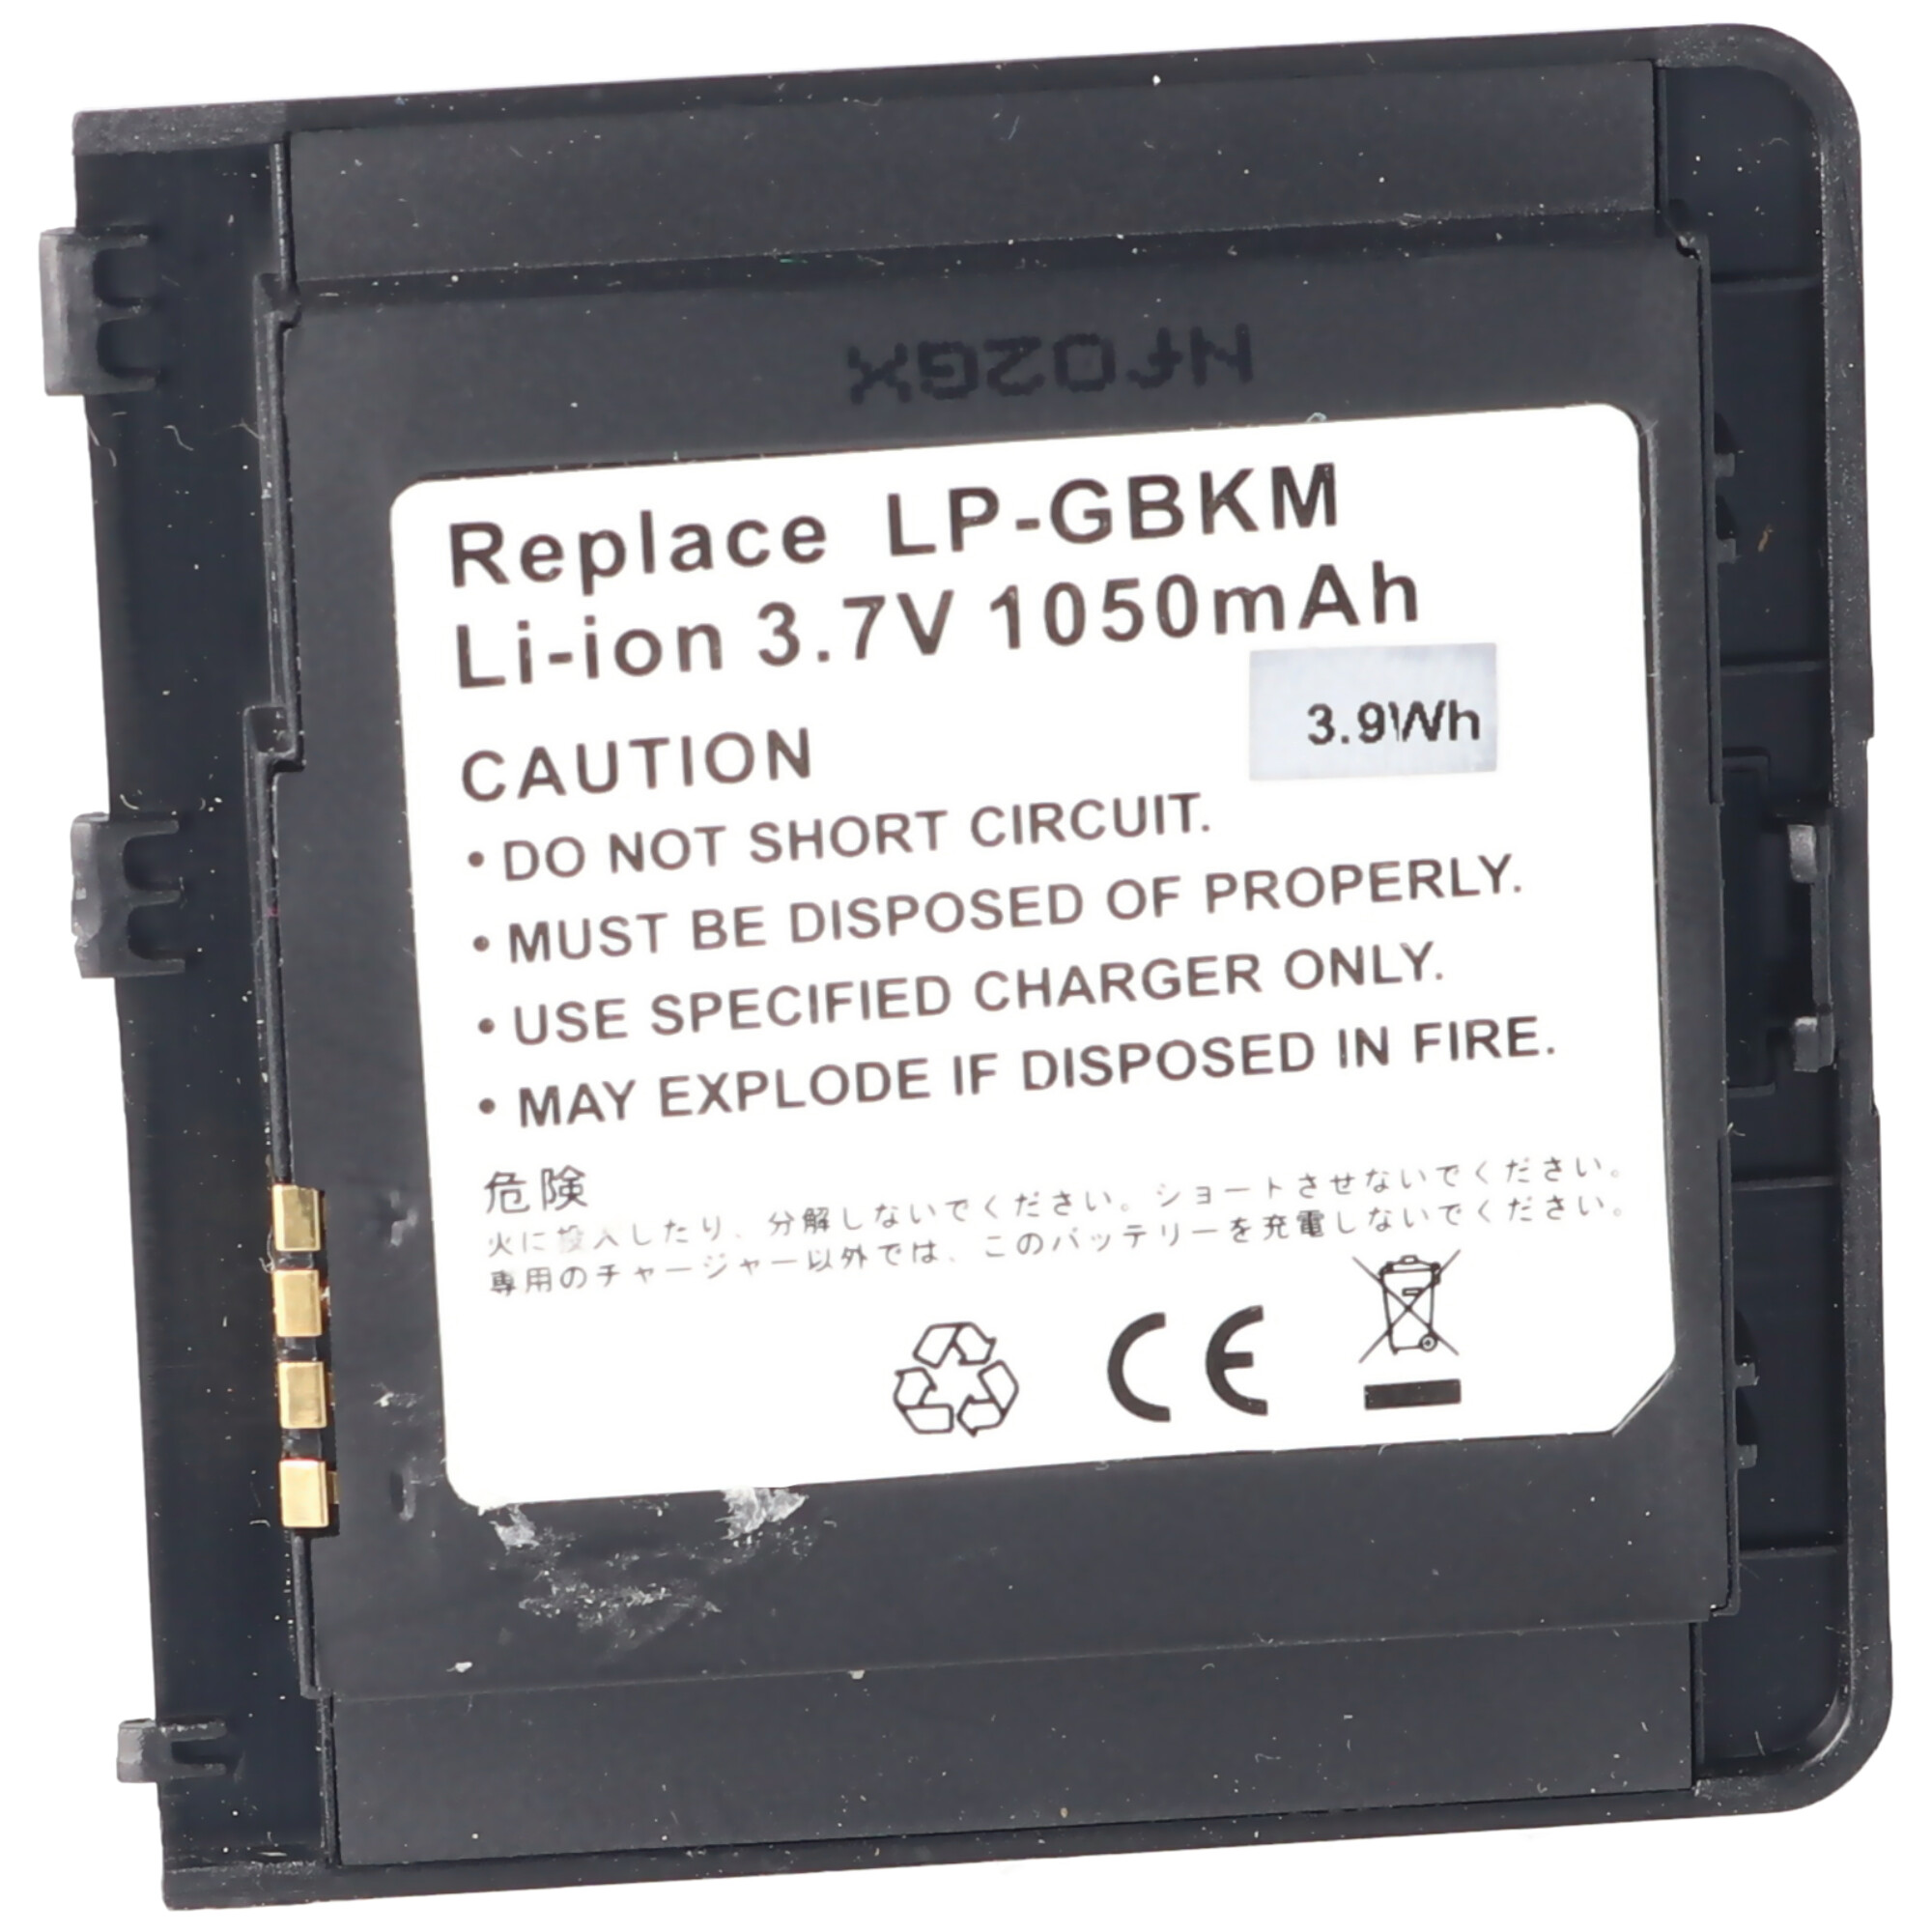 LGLP-GBKM, 1050 für ACCUCELL mAh LG Handy-Akku, KS20, SBPP0023301 passend Li-Ion Akku Lithium-Ionen -